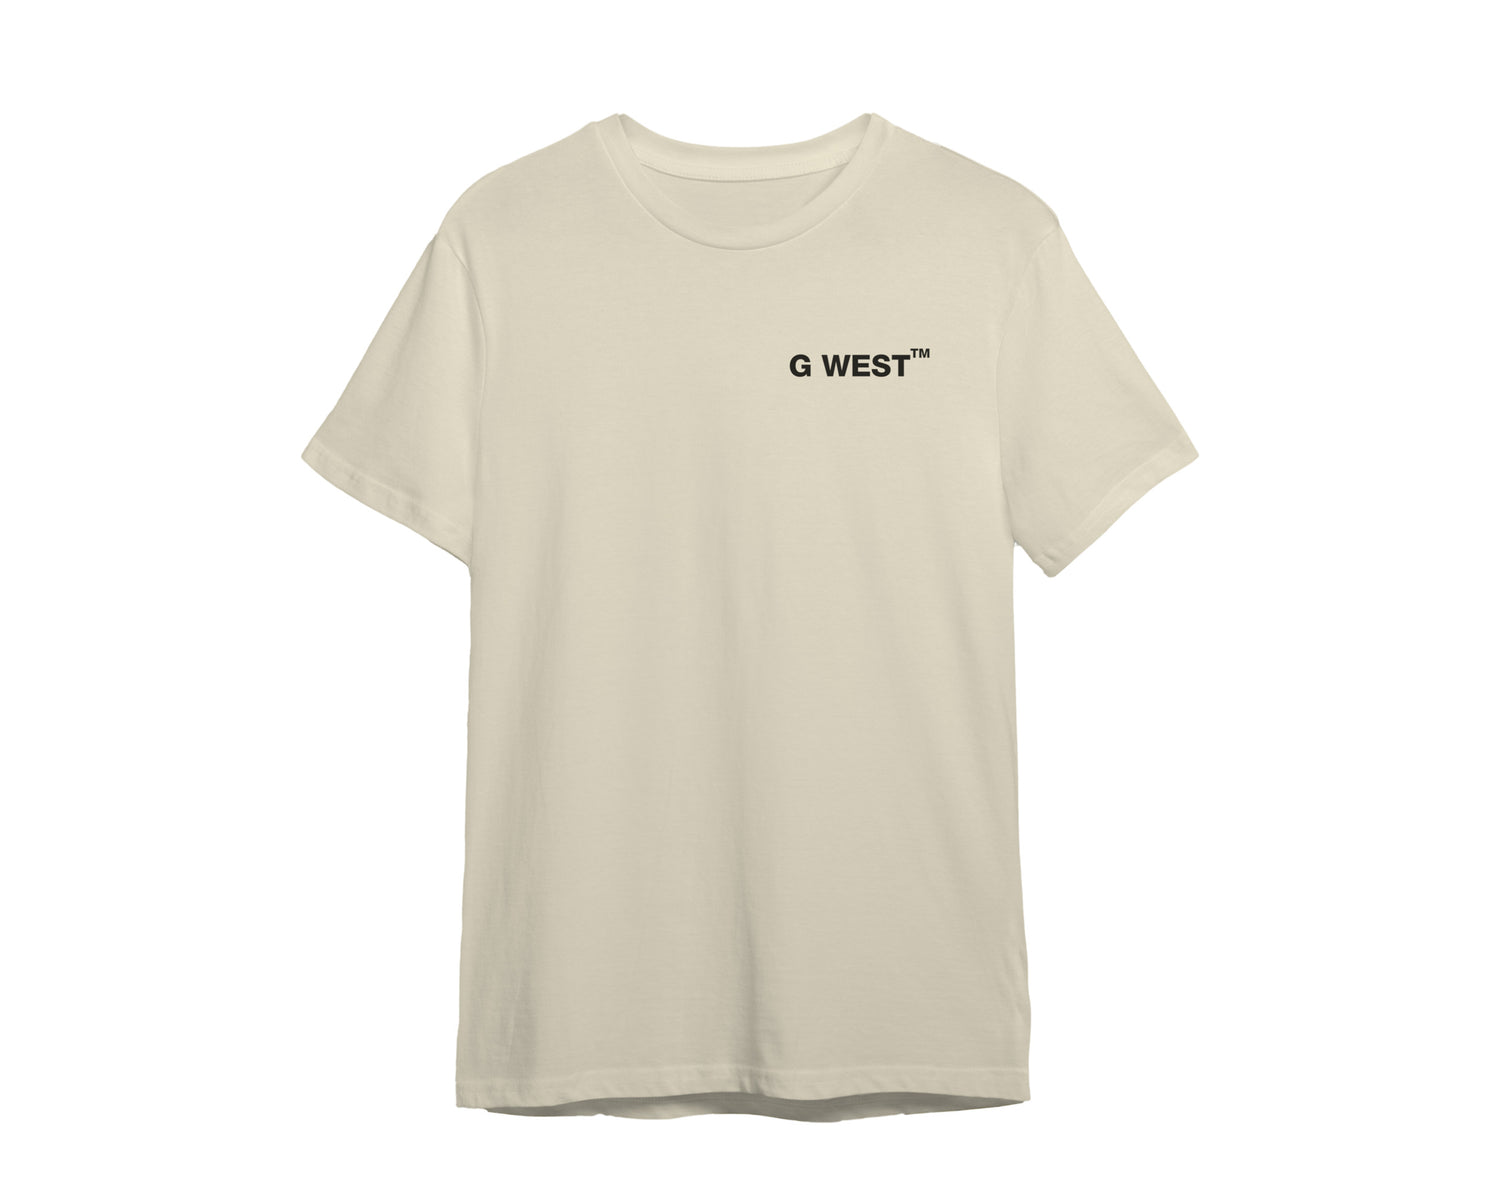 G West Printed Spider Graphic Crew Neck Men's T-Shirt